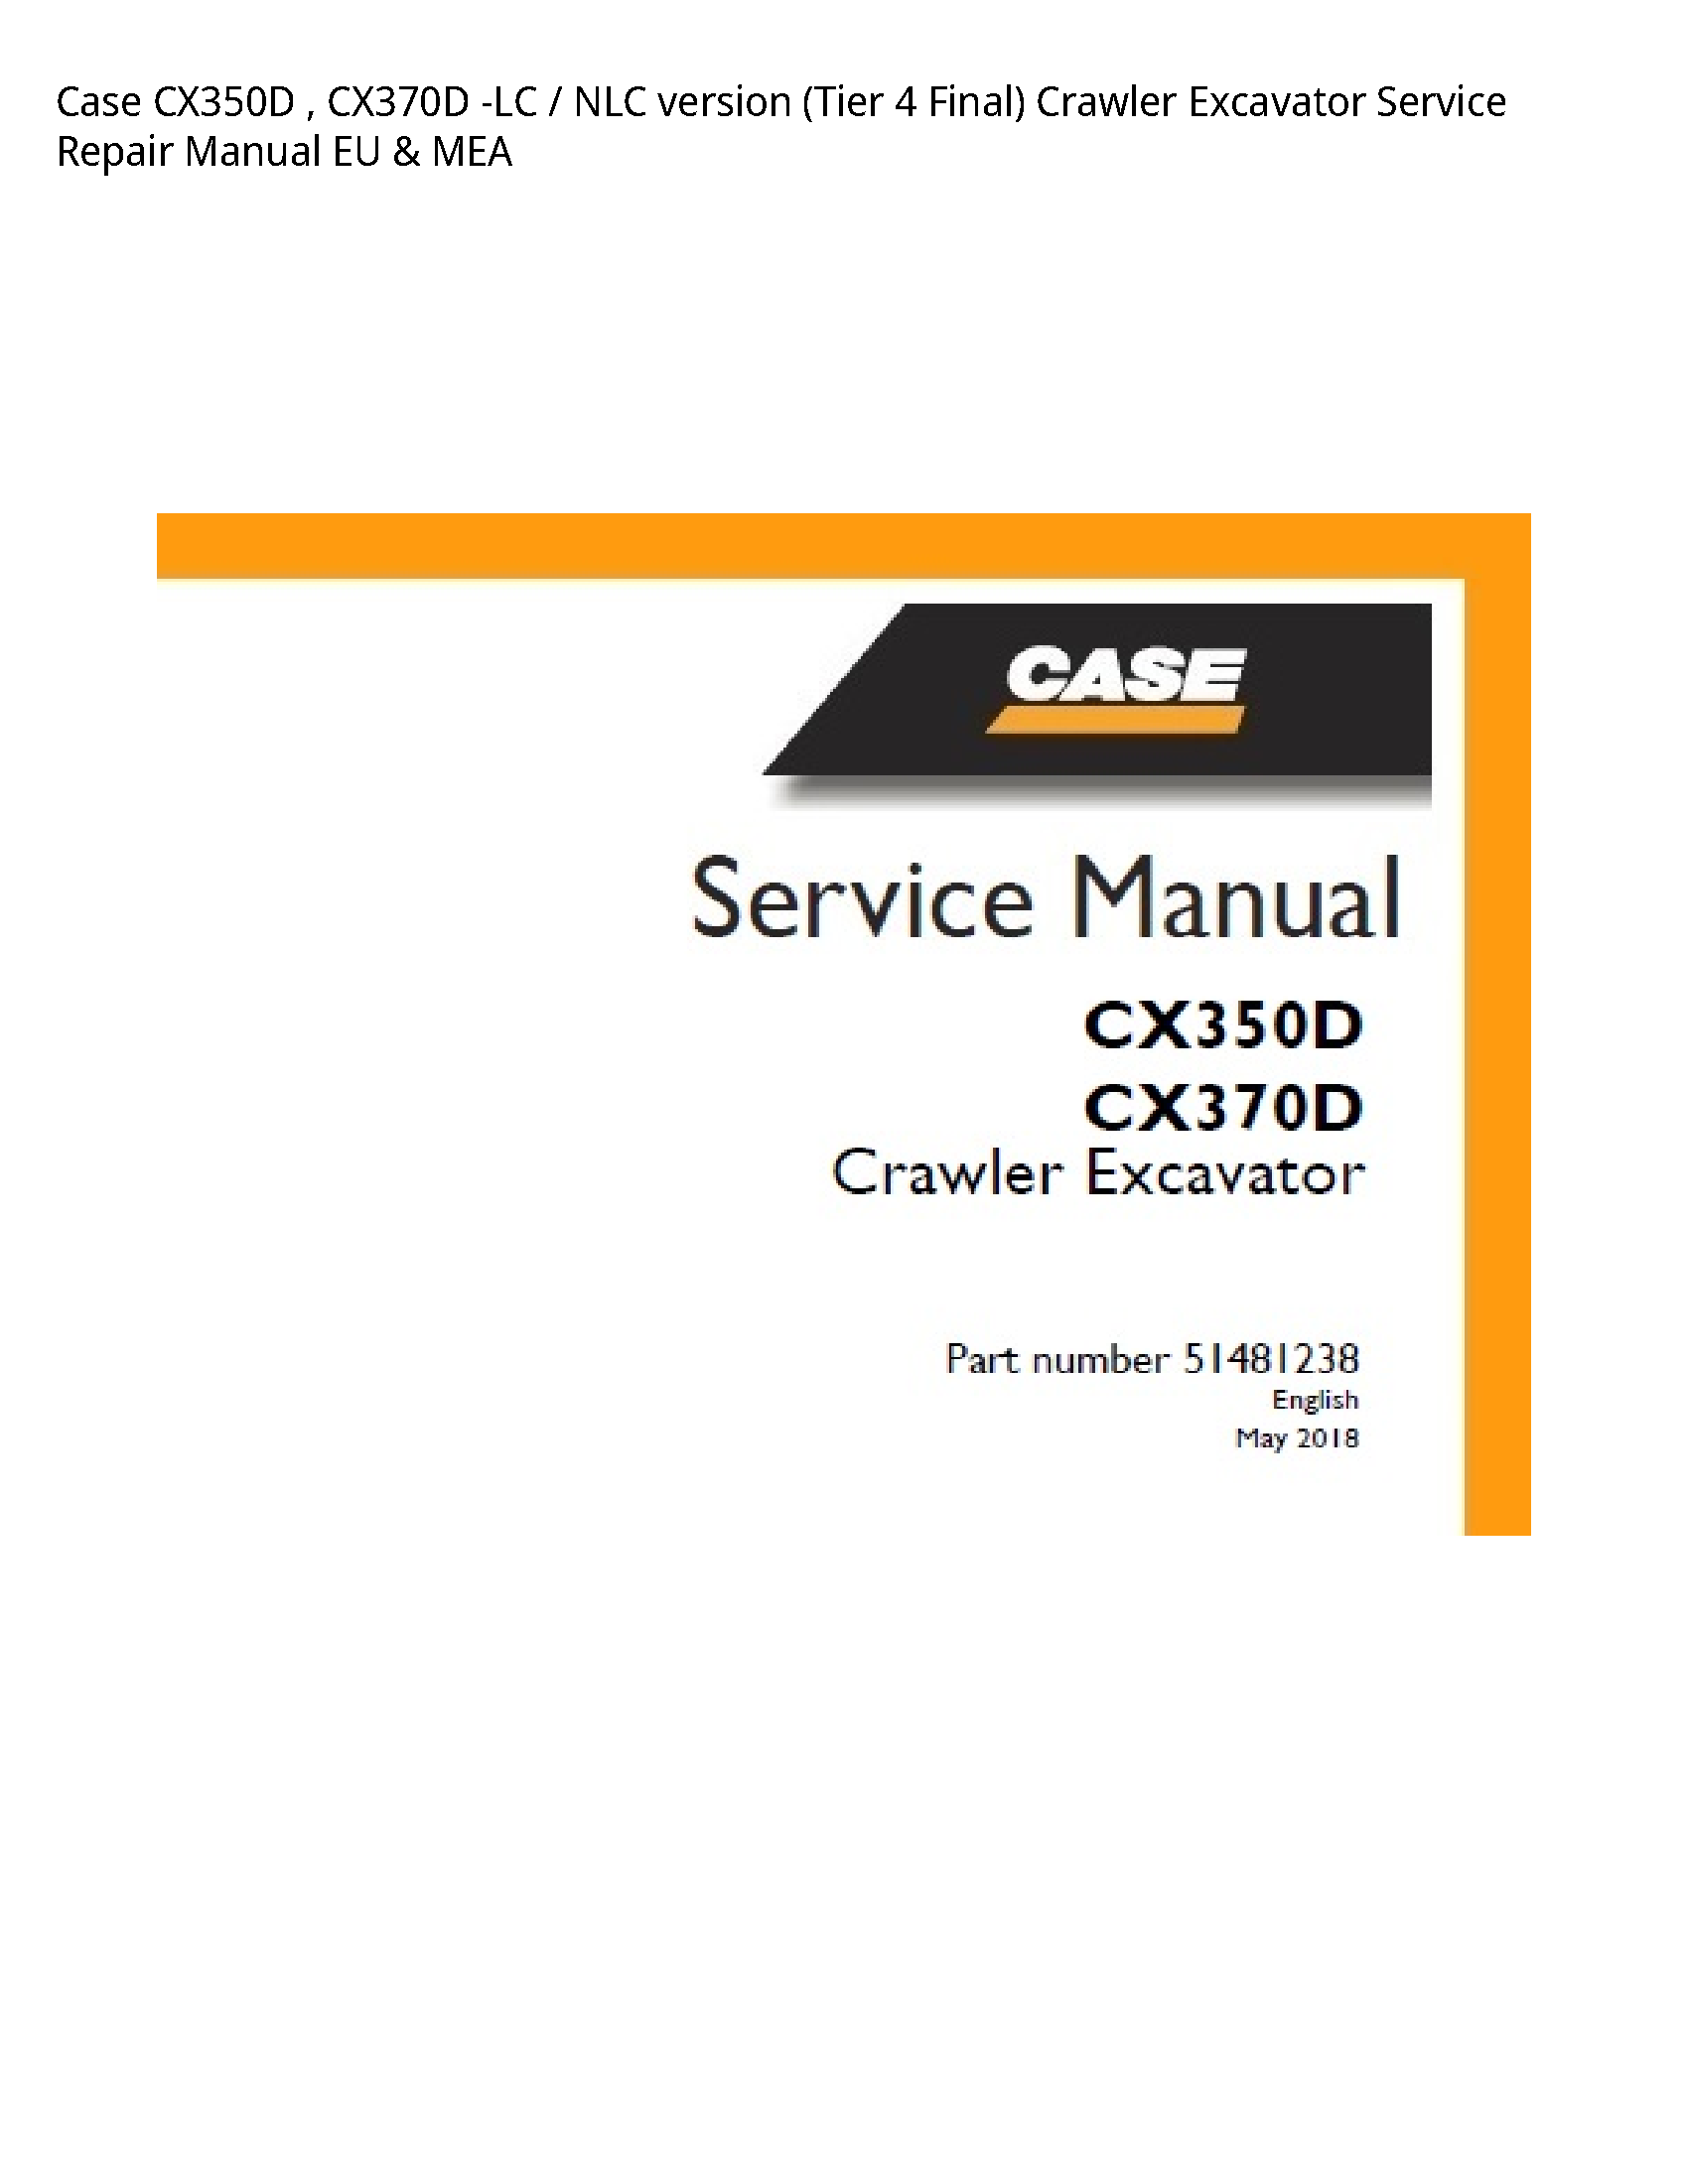 Case/Case IH CX350D -LC NLC version (Tier Final) Crawler Excavator manual